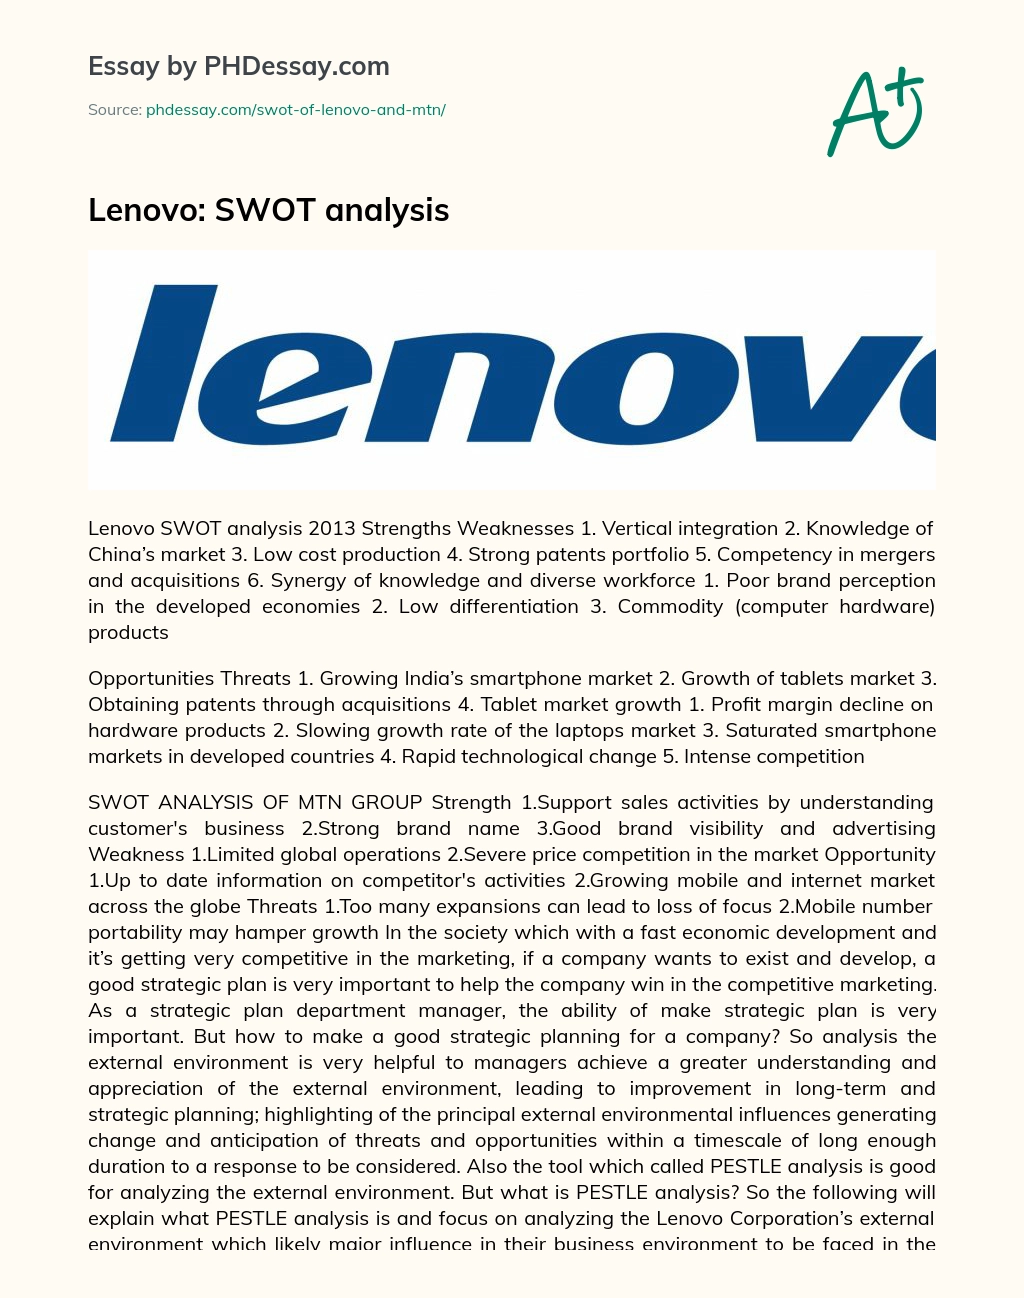 Lenovo: SWOT analysis essay